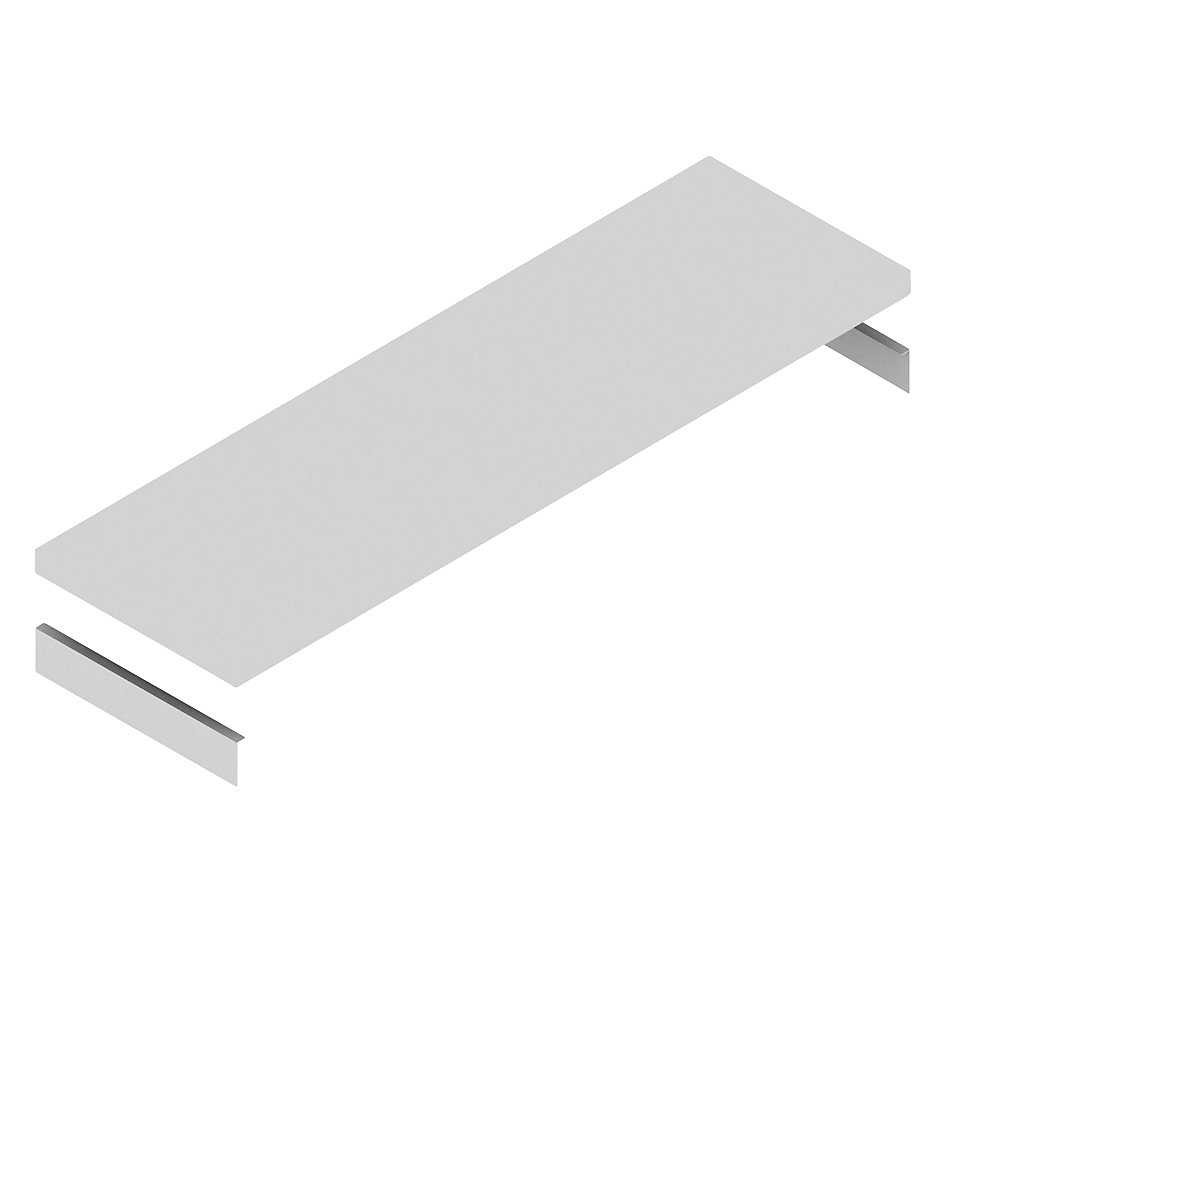 Shelf, incl. support beams – hofe